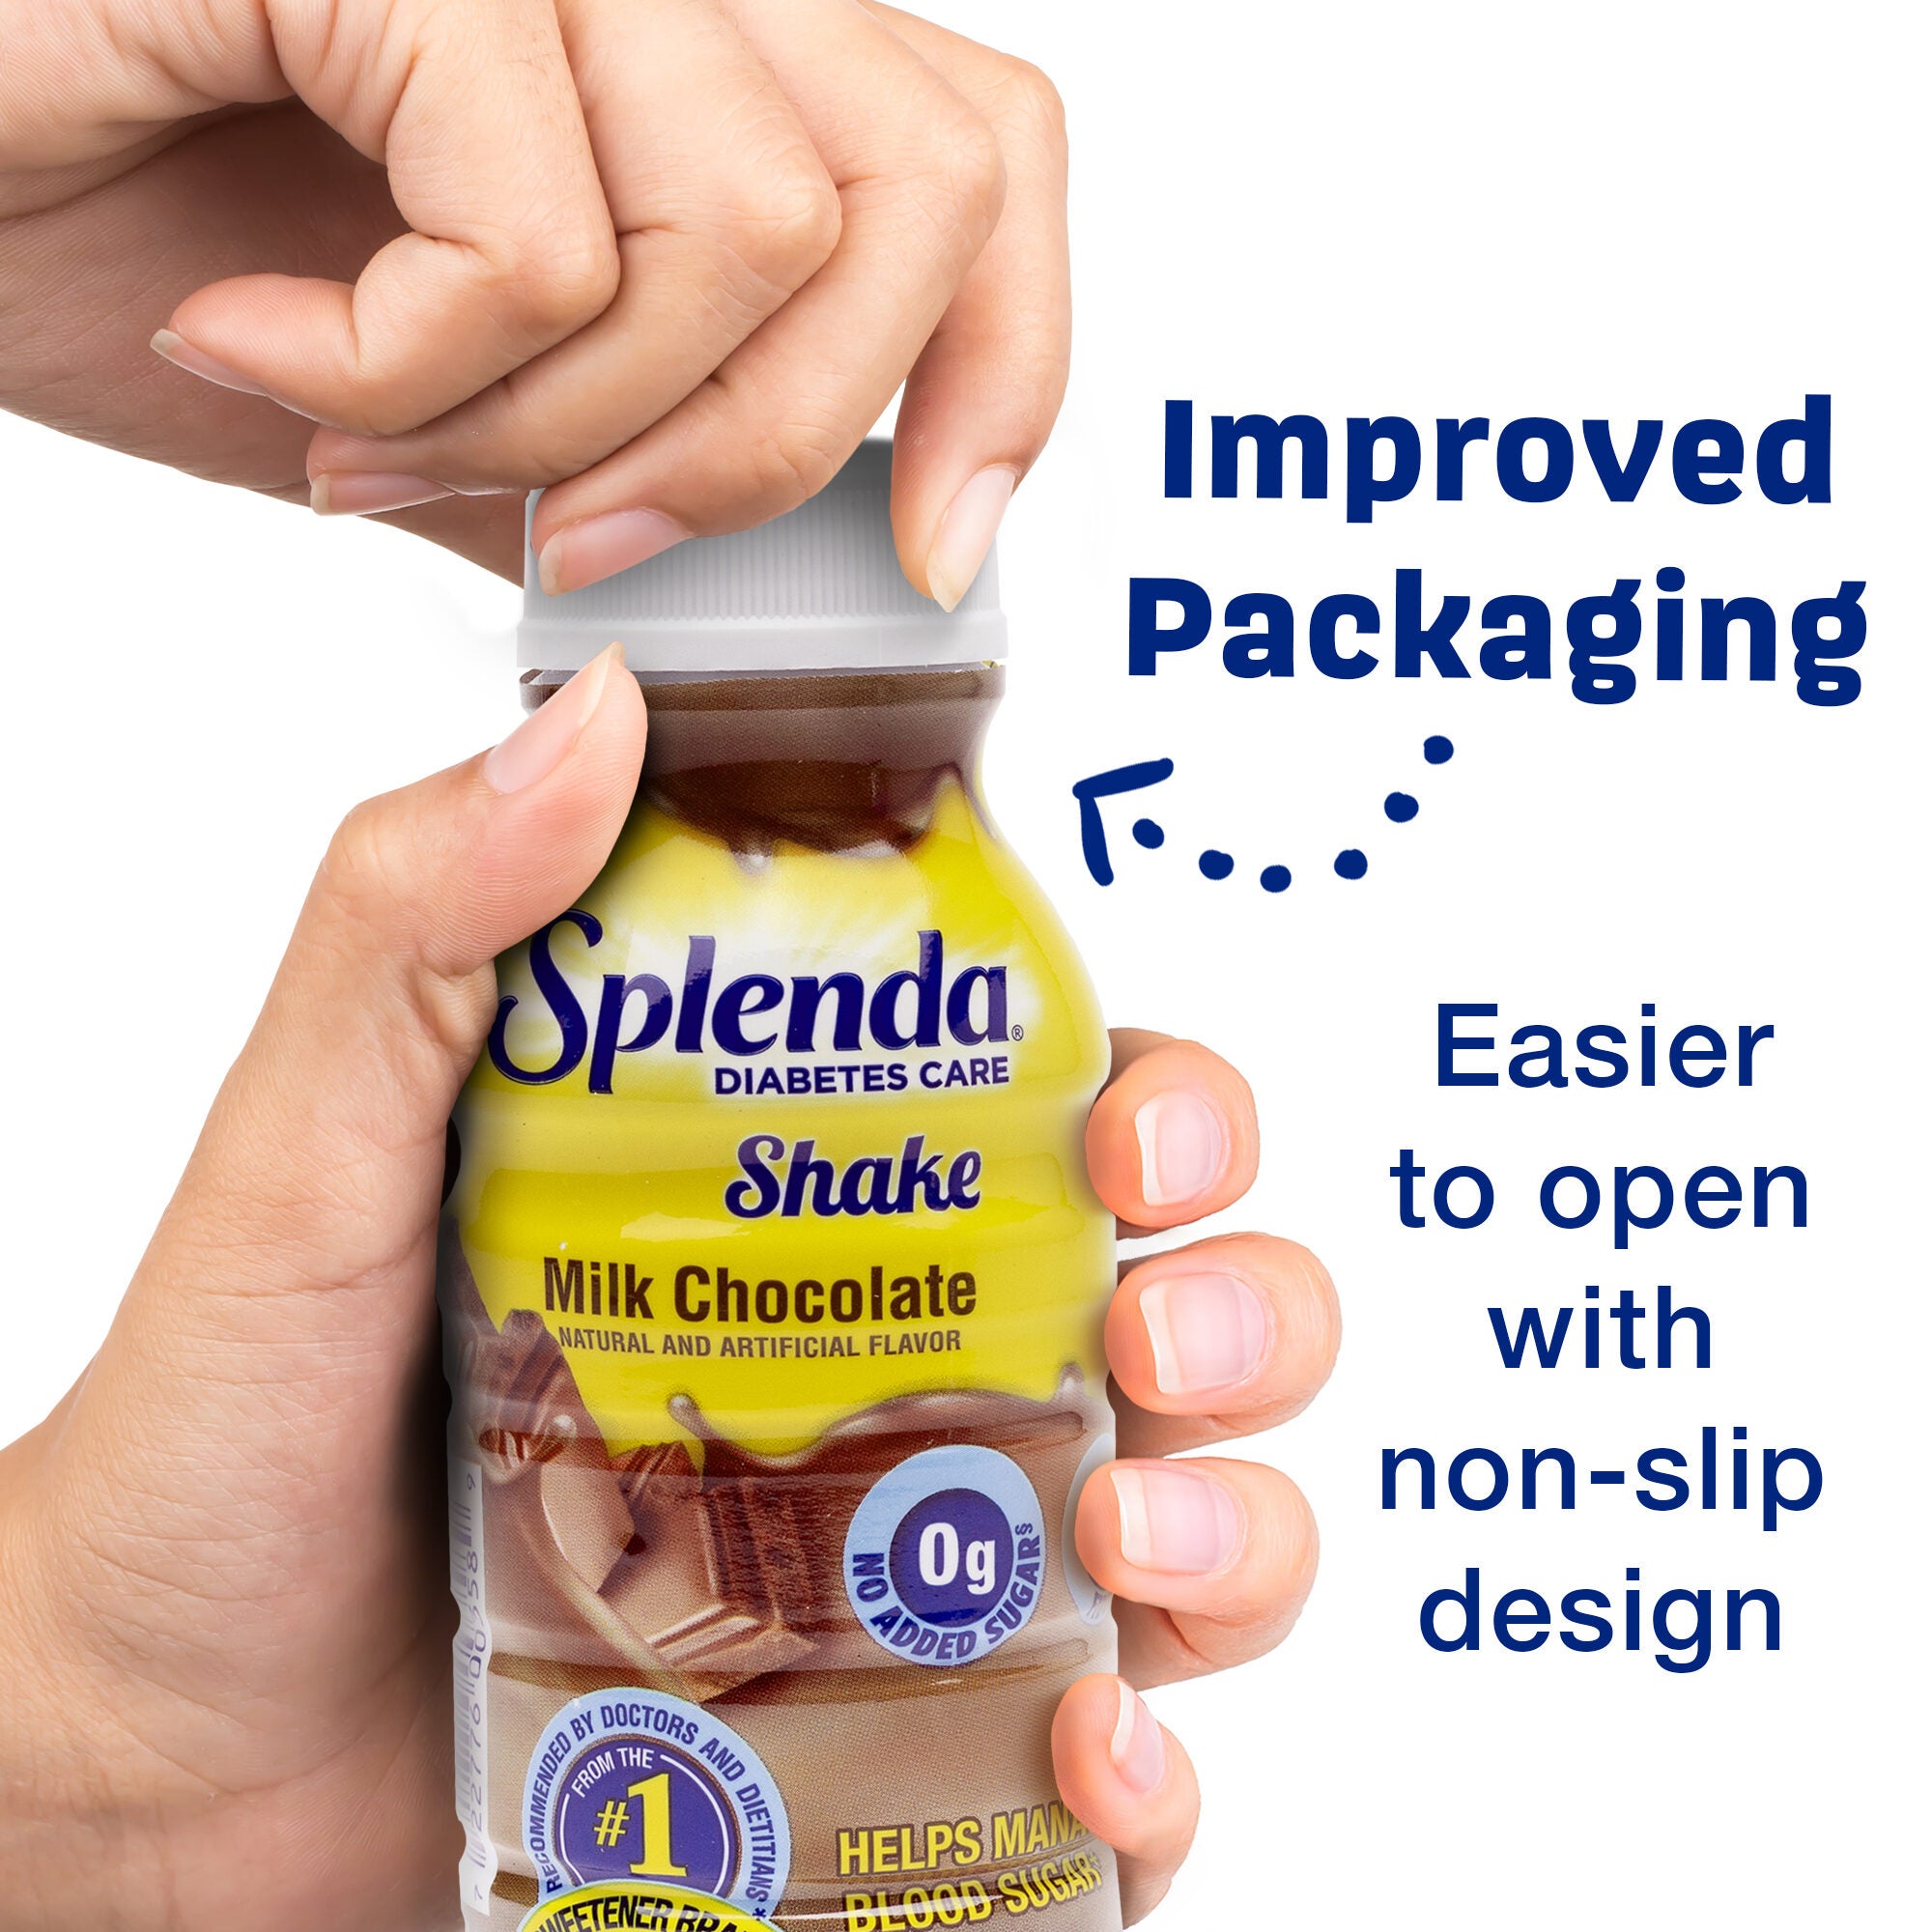 Splenda® Milk Chocolate Diabetes Care Shakes - Improved Packaging